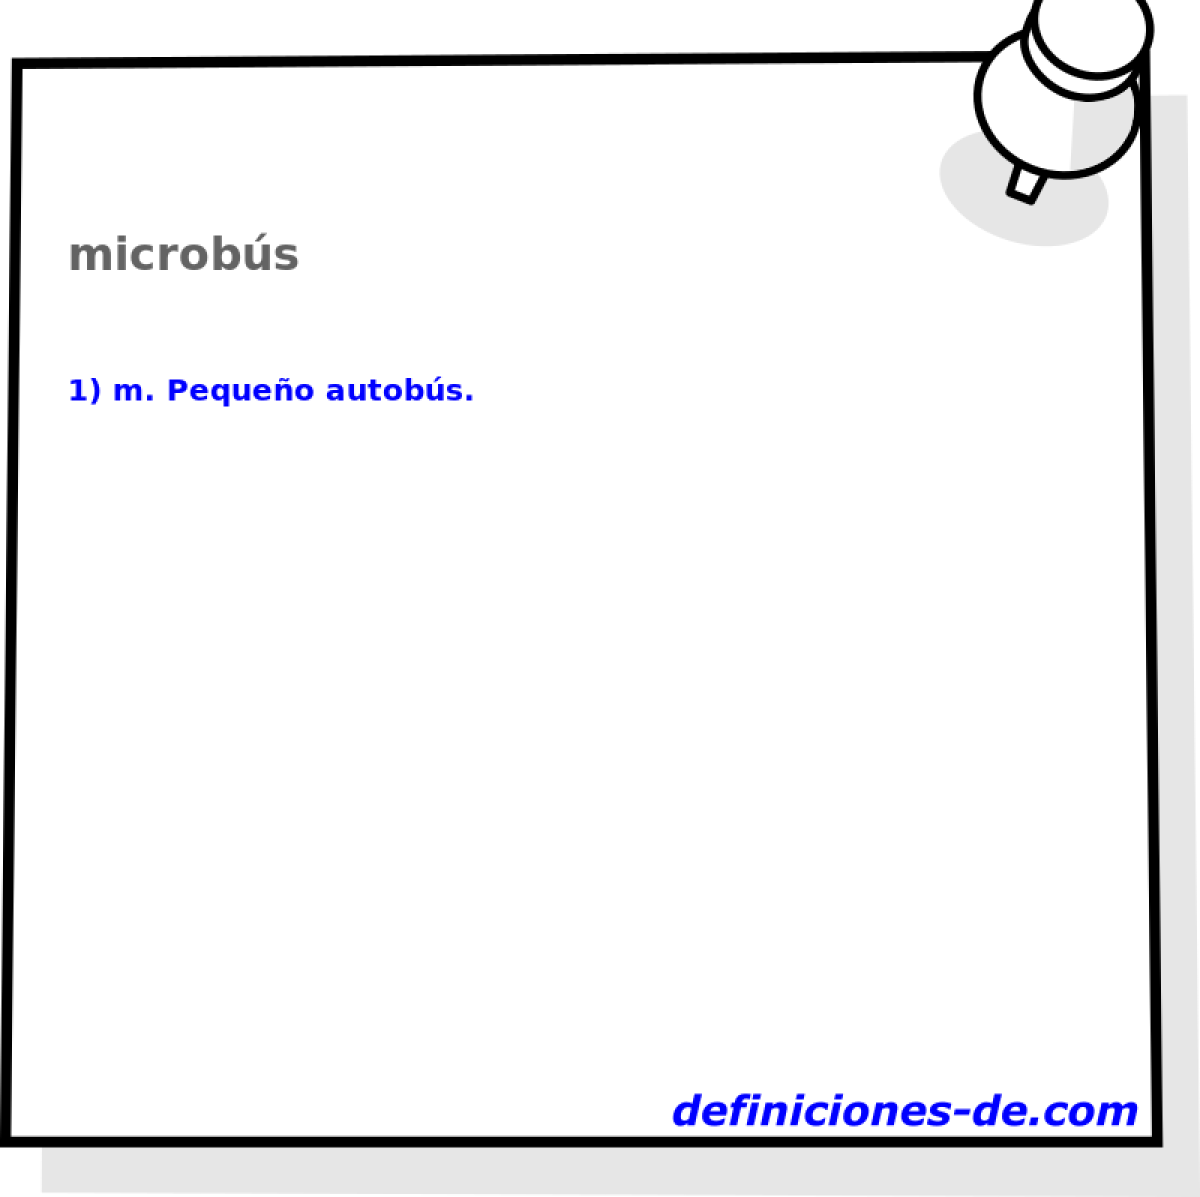 microbs 